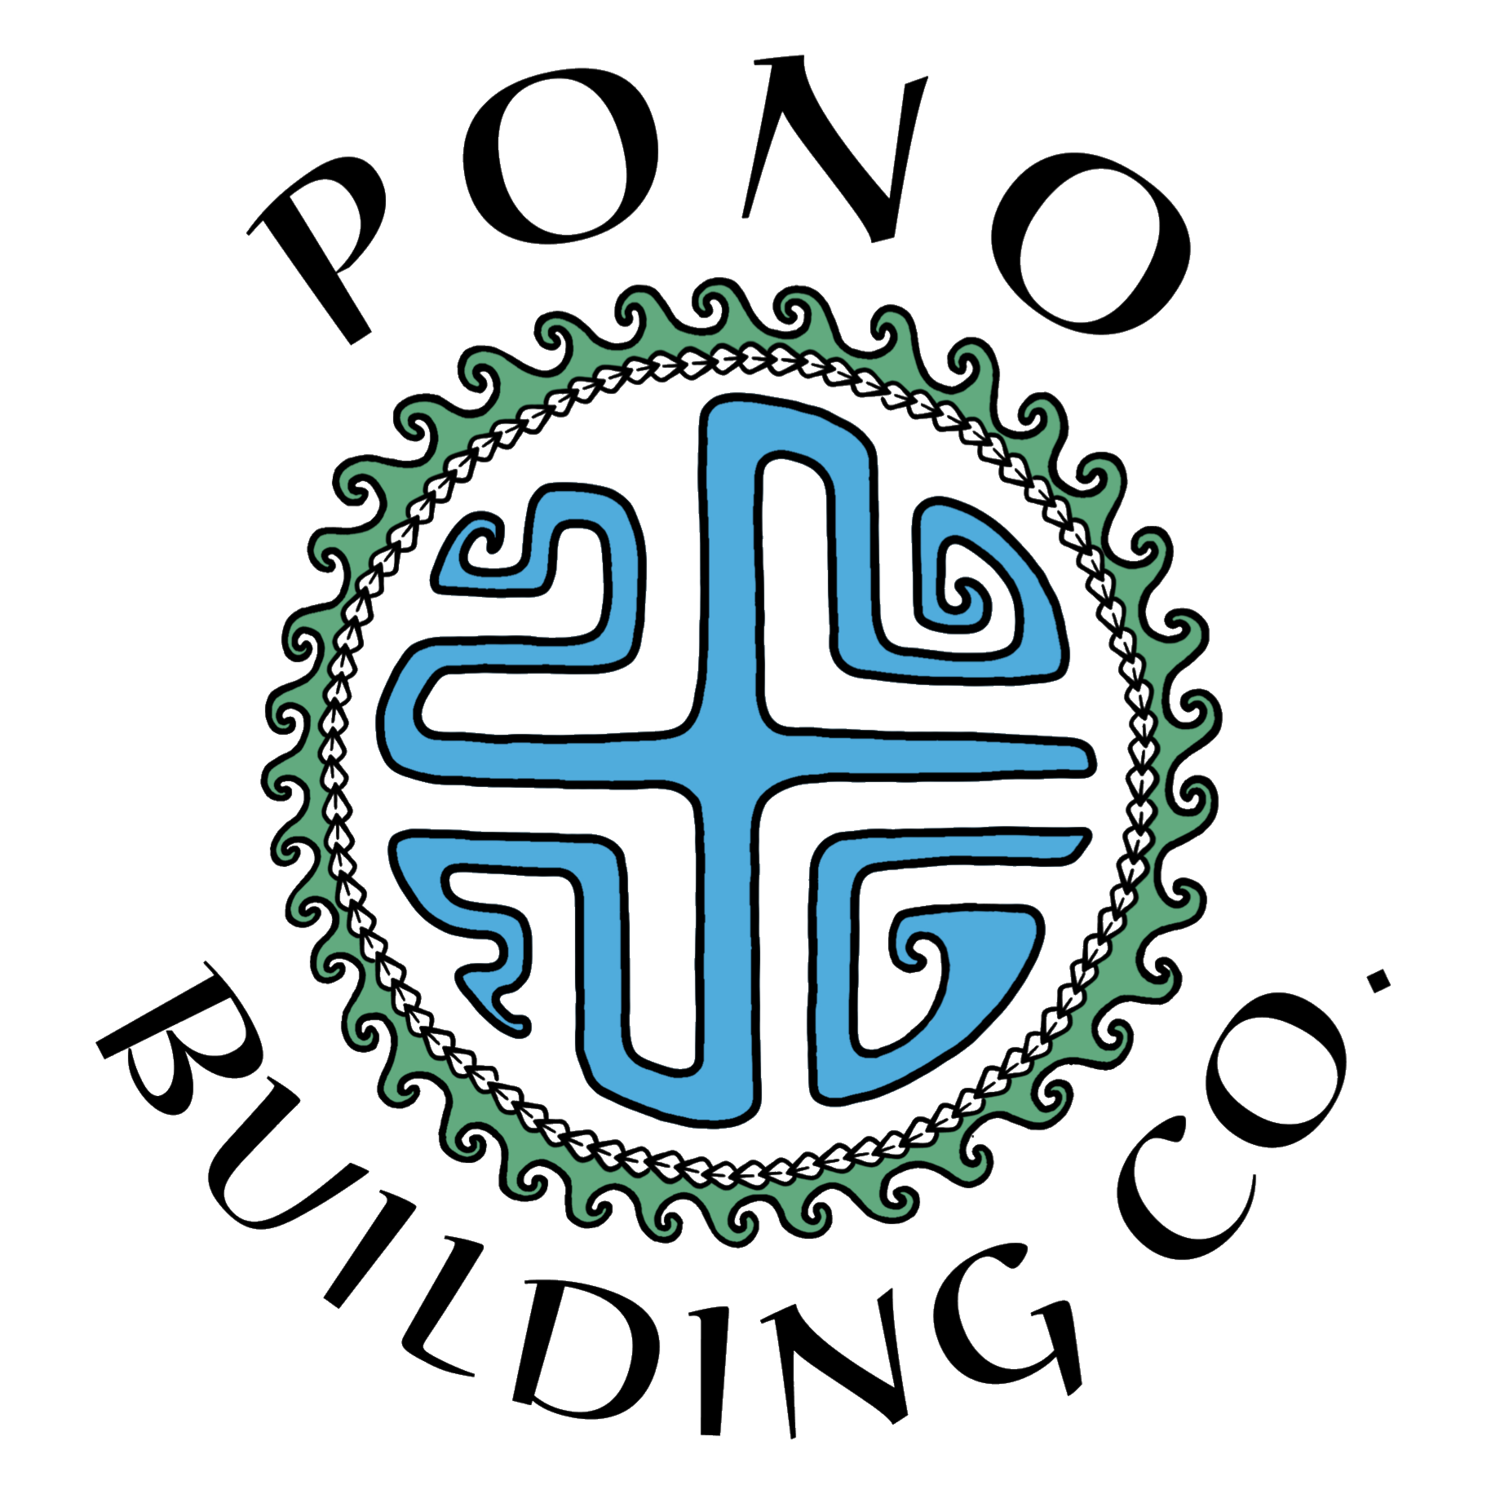 Pono Building Co. 